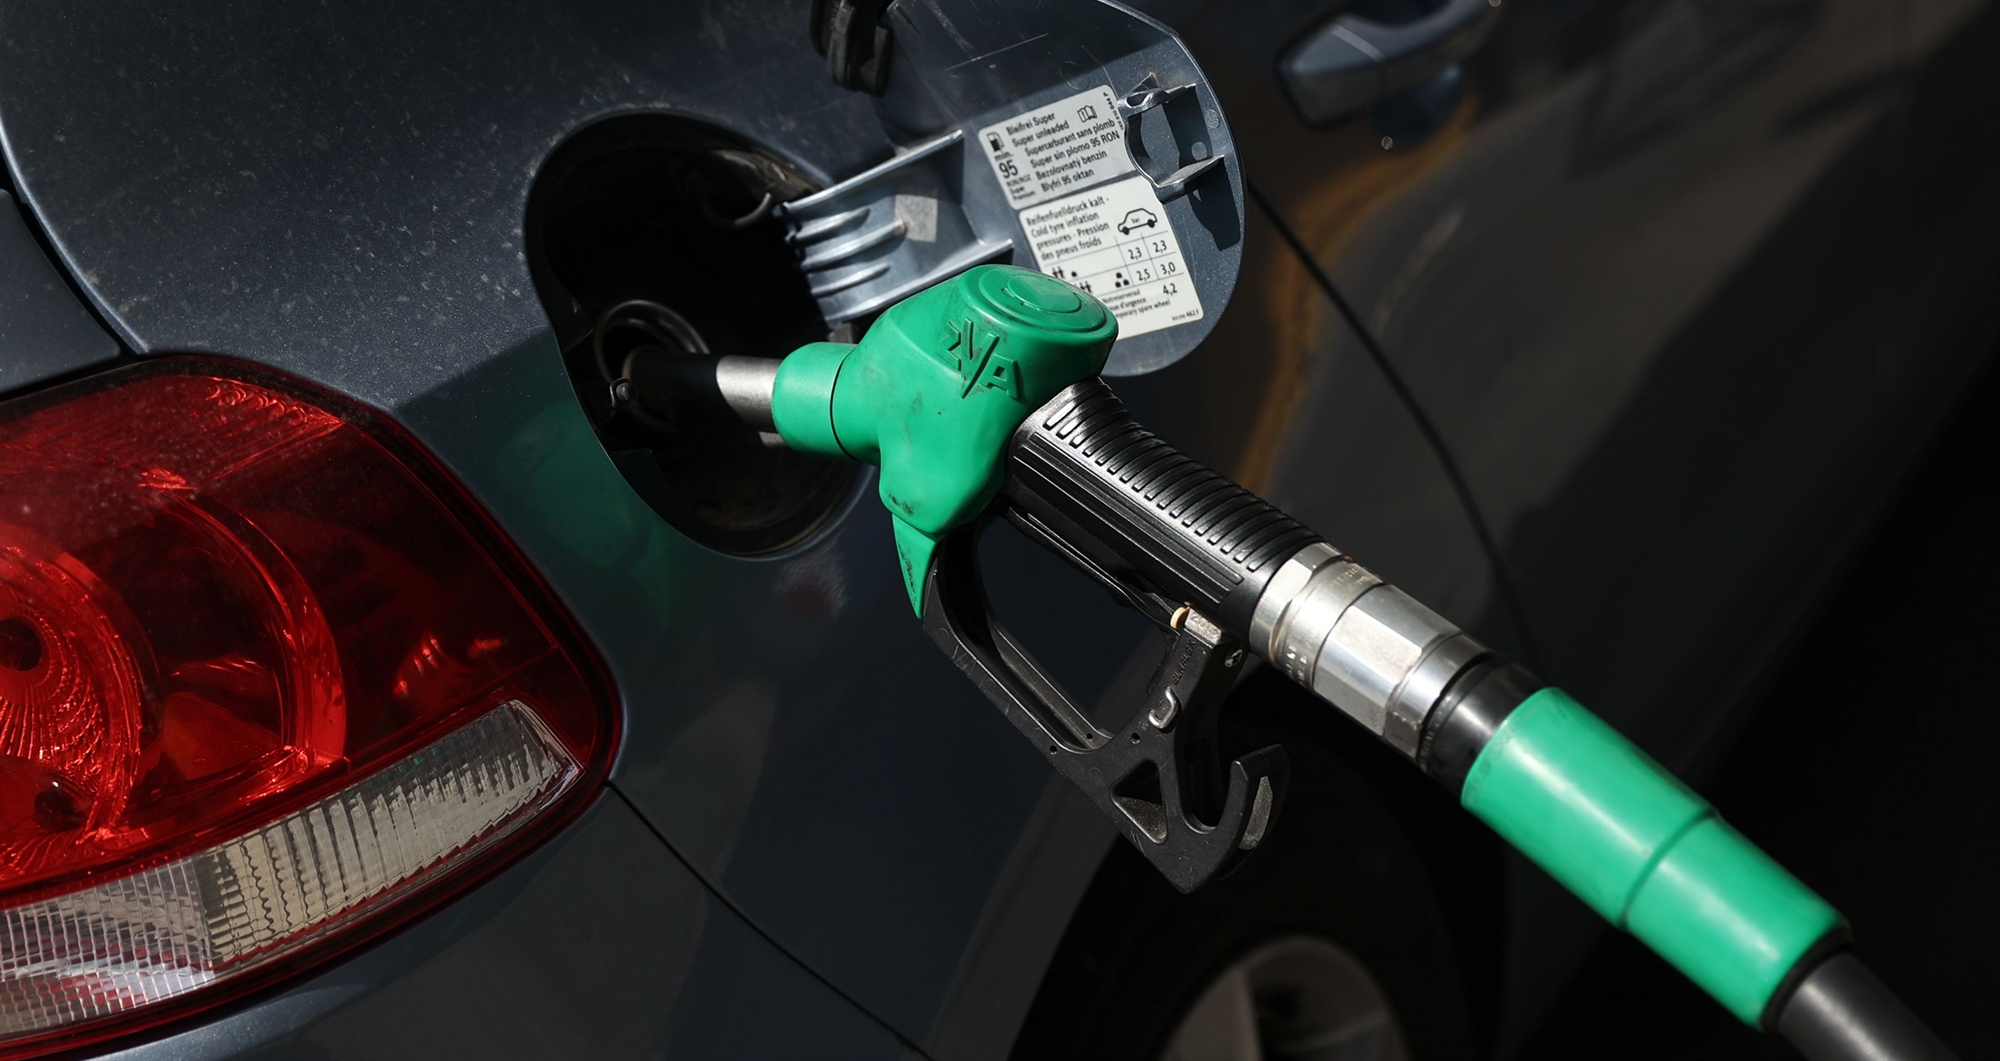 «Fuel pass sequel»: Πώς θα είναι η νέα μορφή της επιδότησης καυσίμων